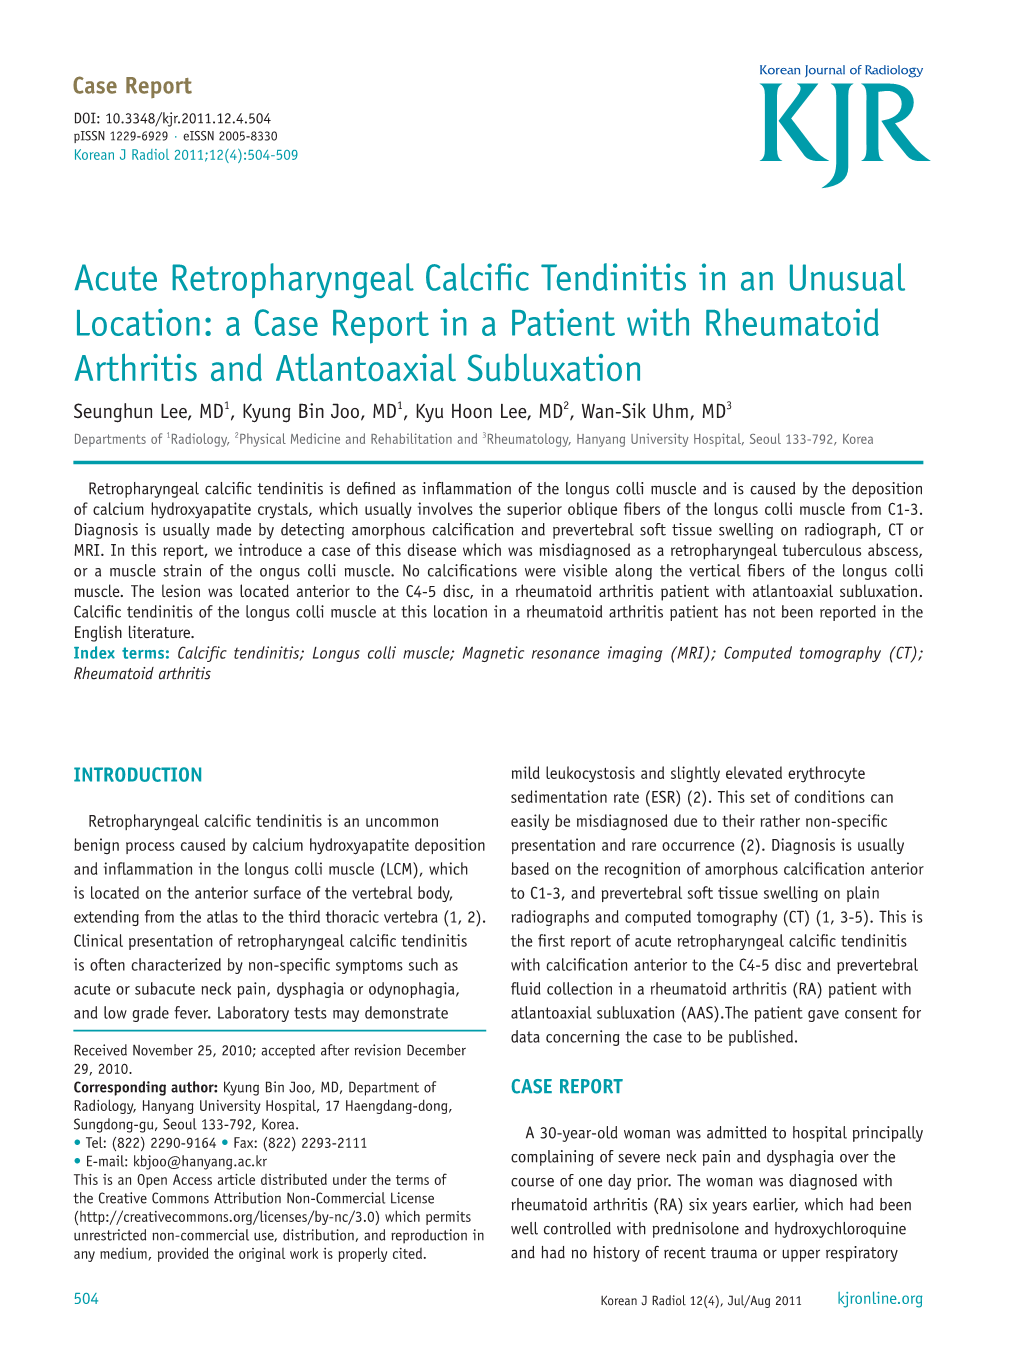 Acute Retropharyngeal Calcific Tendinitis